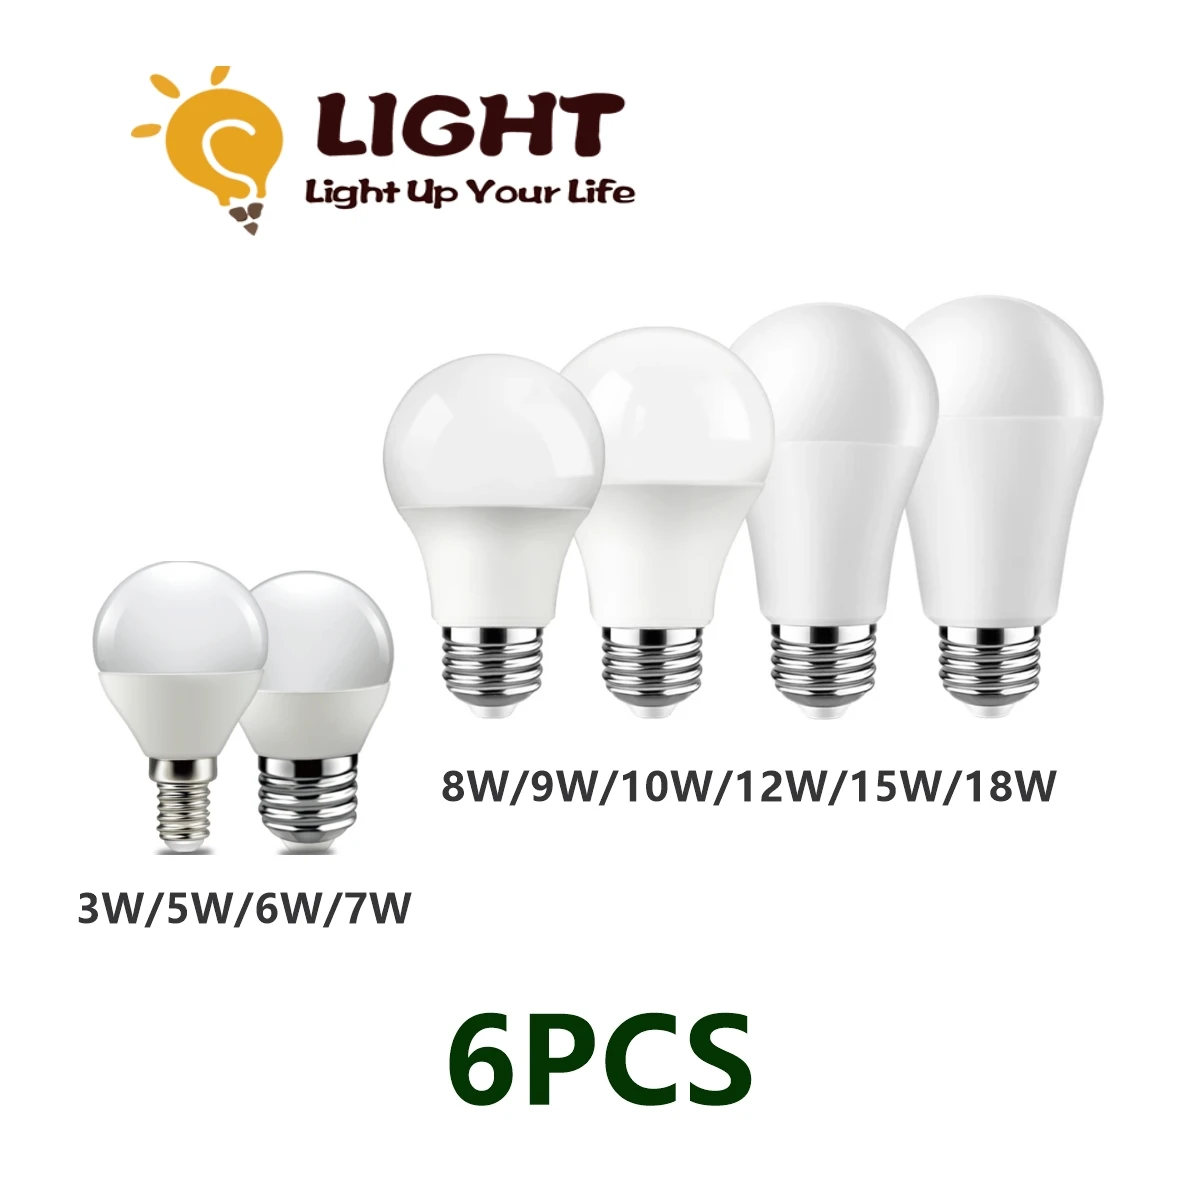 

6PCS Led Bulb AC220V Lampara E14 E27 B22 Warm Cold White 3W-18W Ball Bulb Lampada Chandelier Lighting Lamp for Home